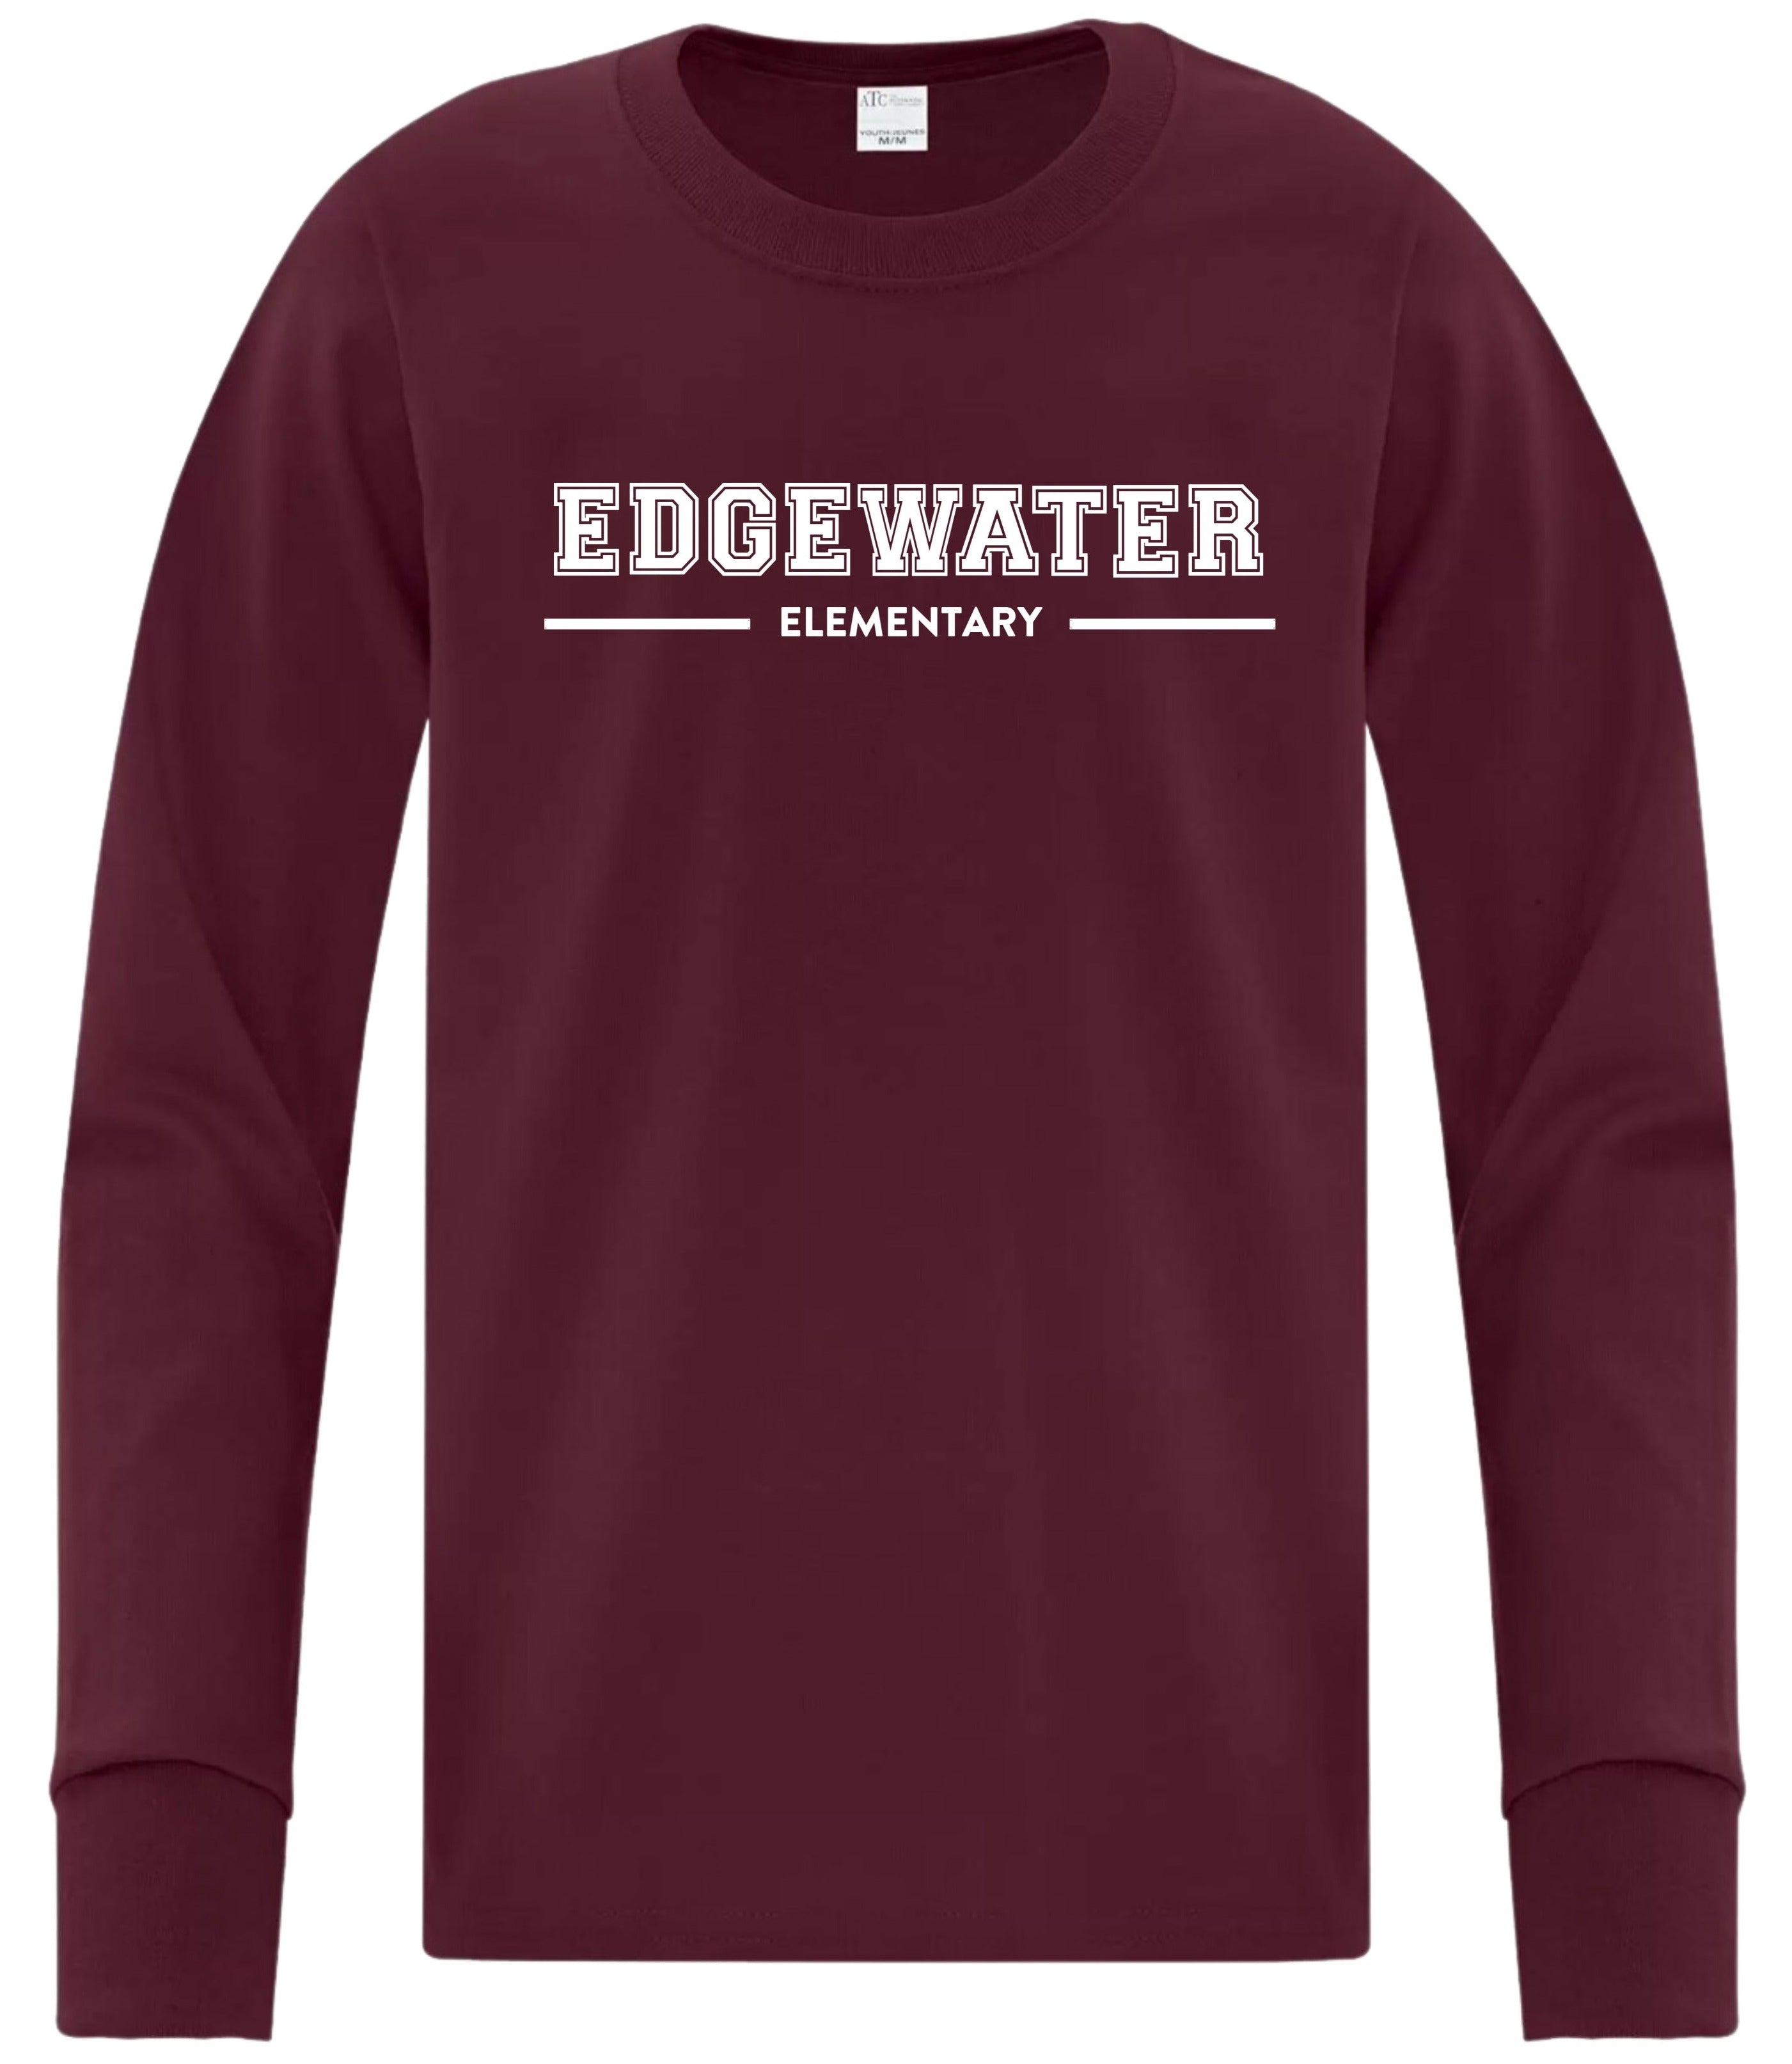 Edgewater Youth Long Sleeve T-Shirt